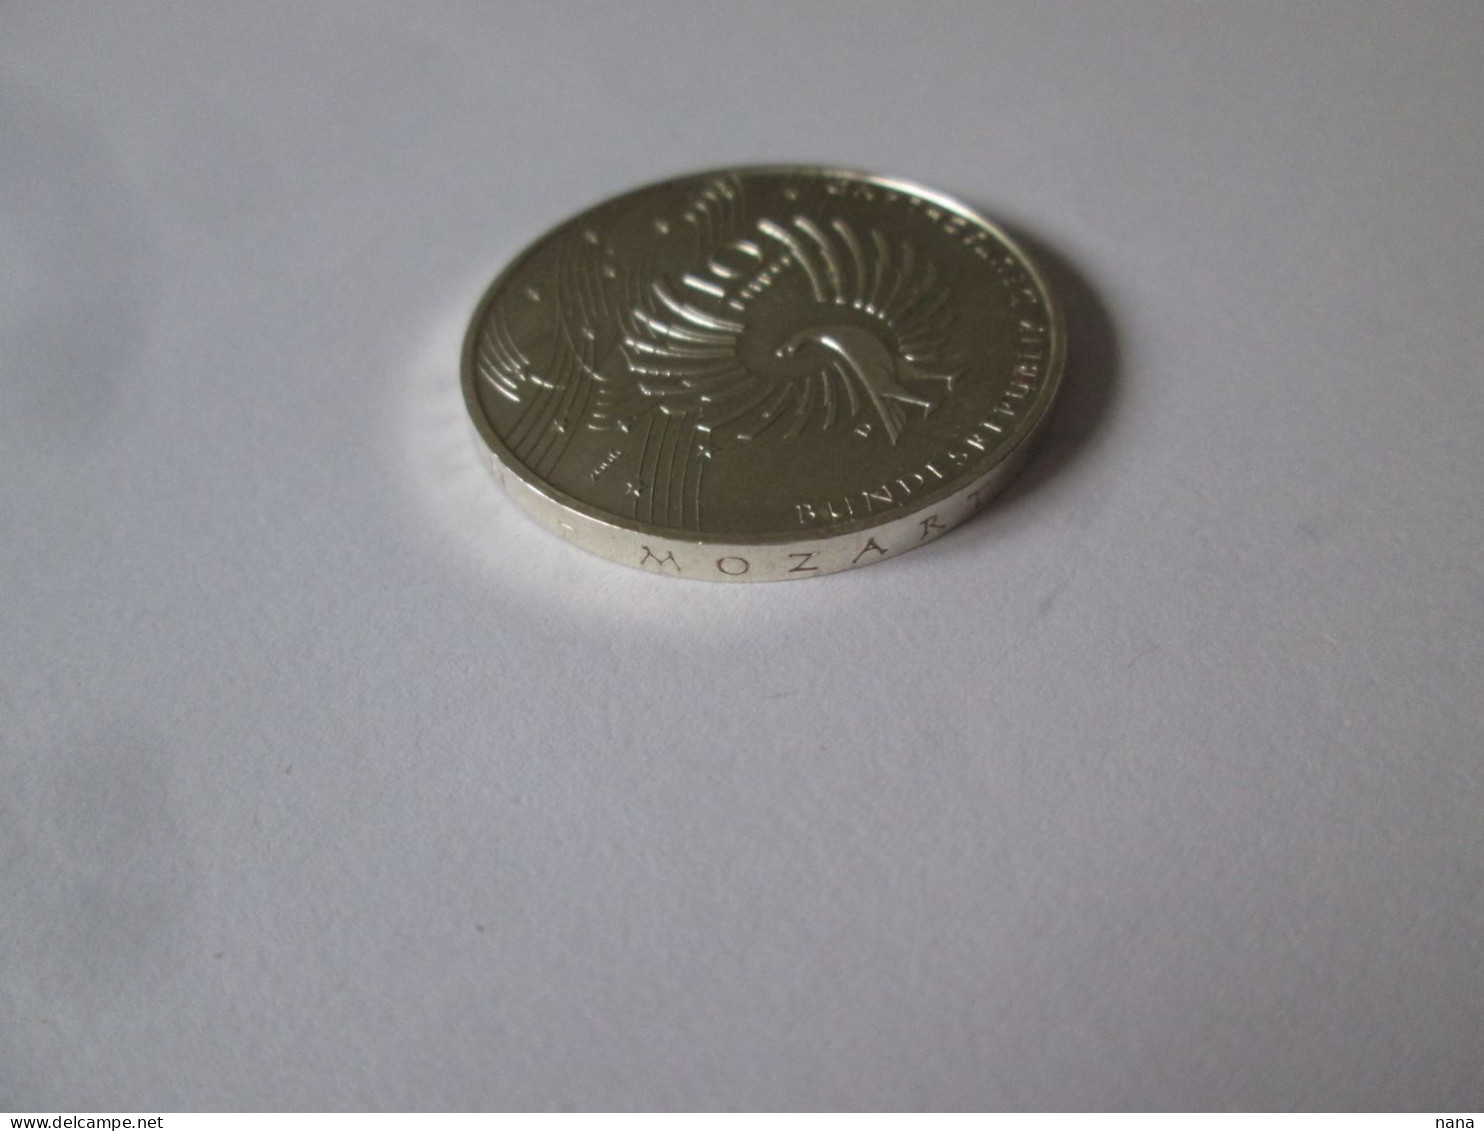 Germany 10 Euro 2006 D AUNC Silver/Argent.925 Commemorative Coin:Mozart,diameter=32 Mm,weight=18 Grams - Conmemorativas